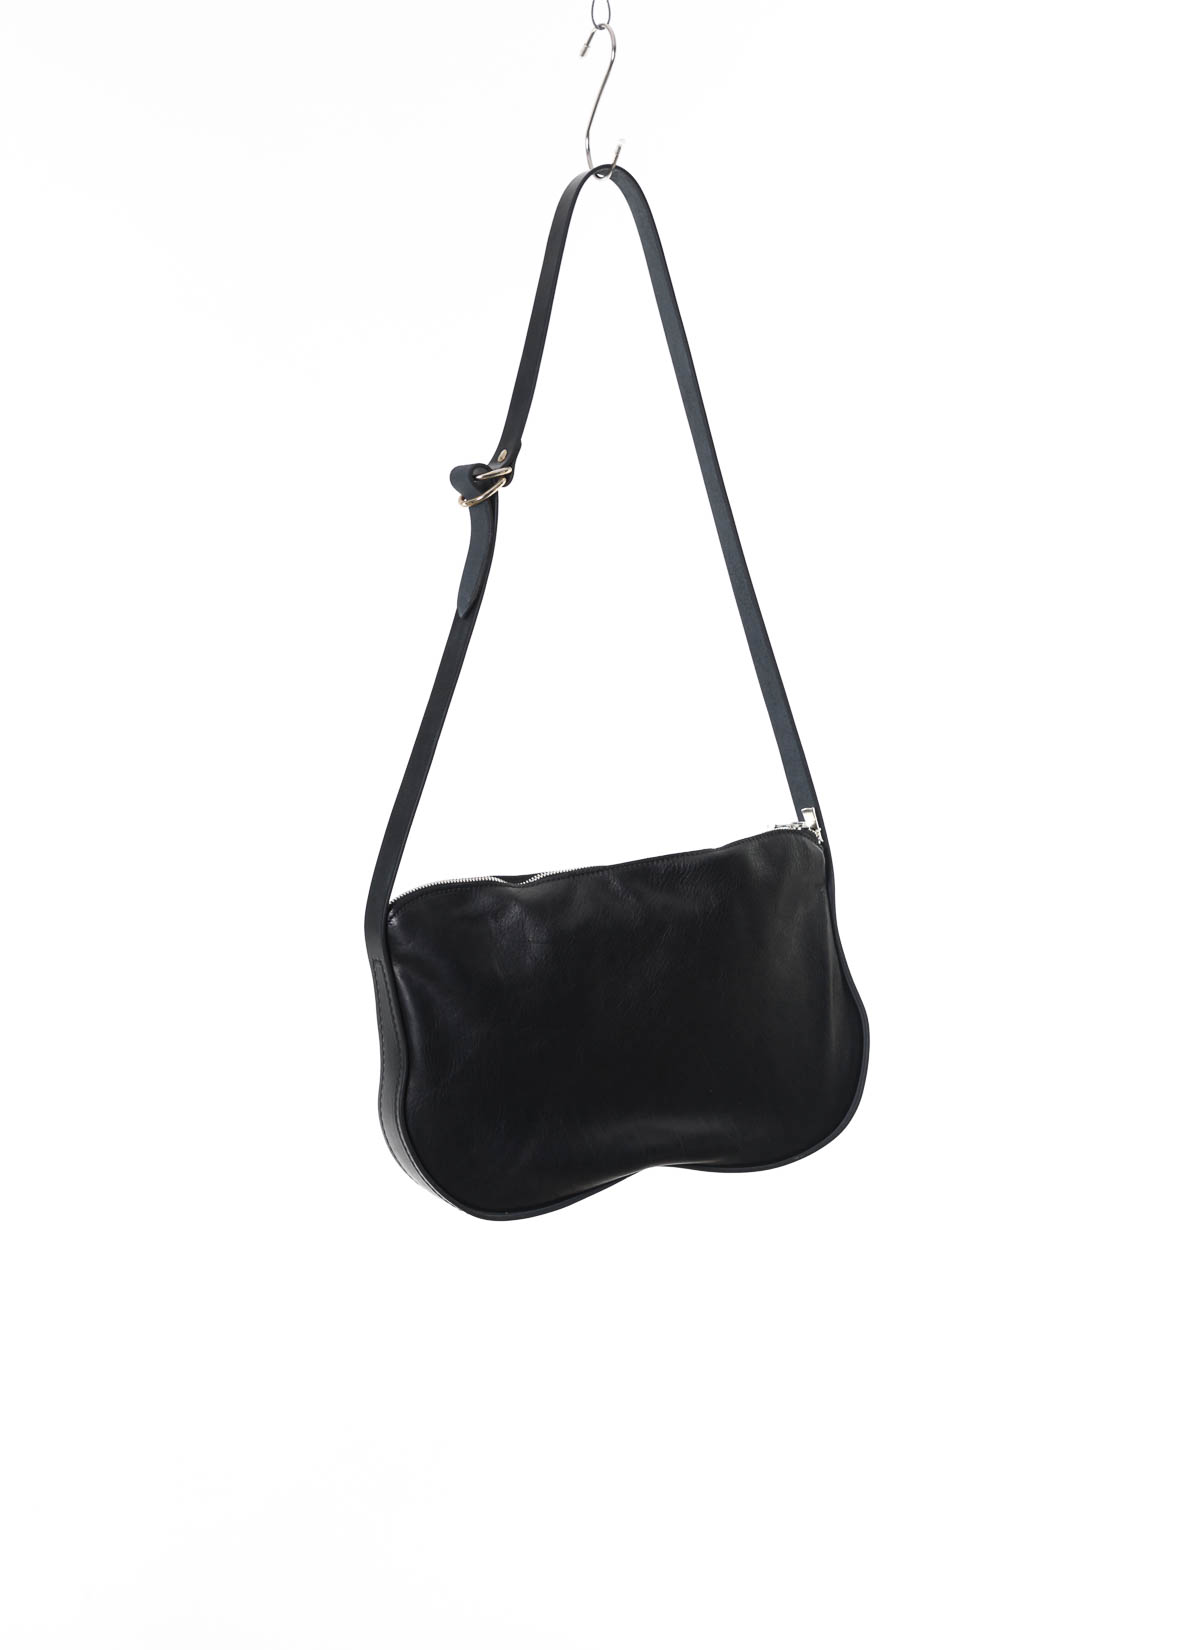 M black leather crossbody bag